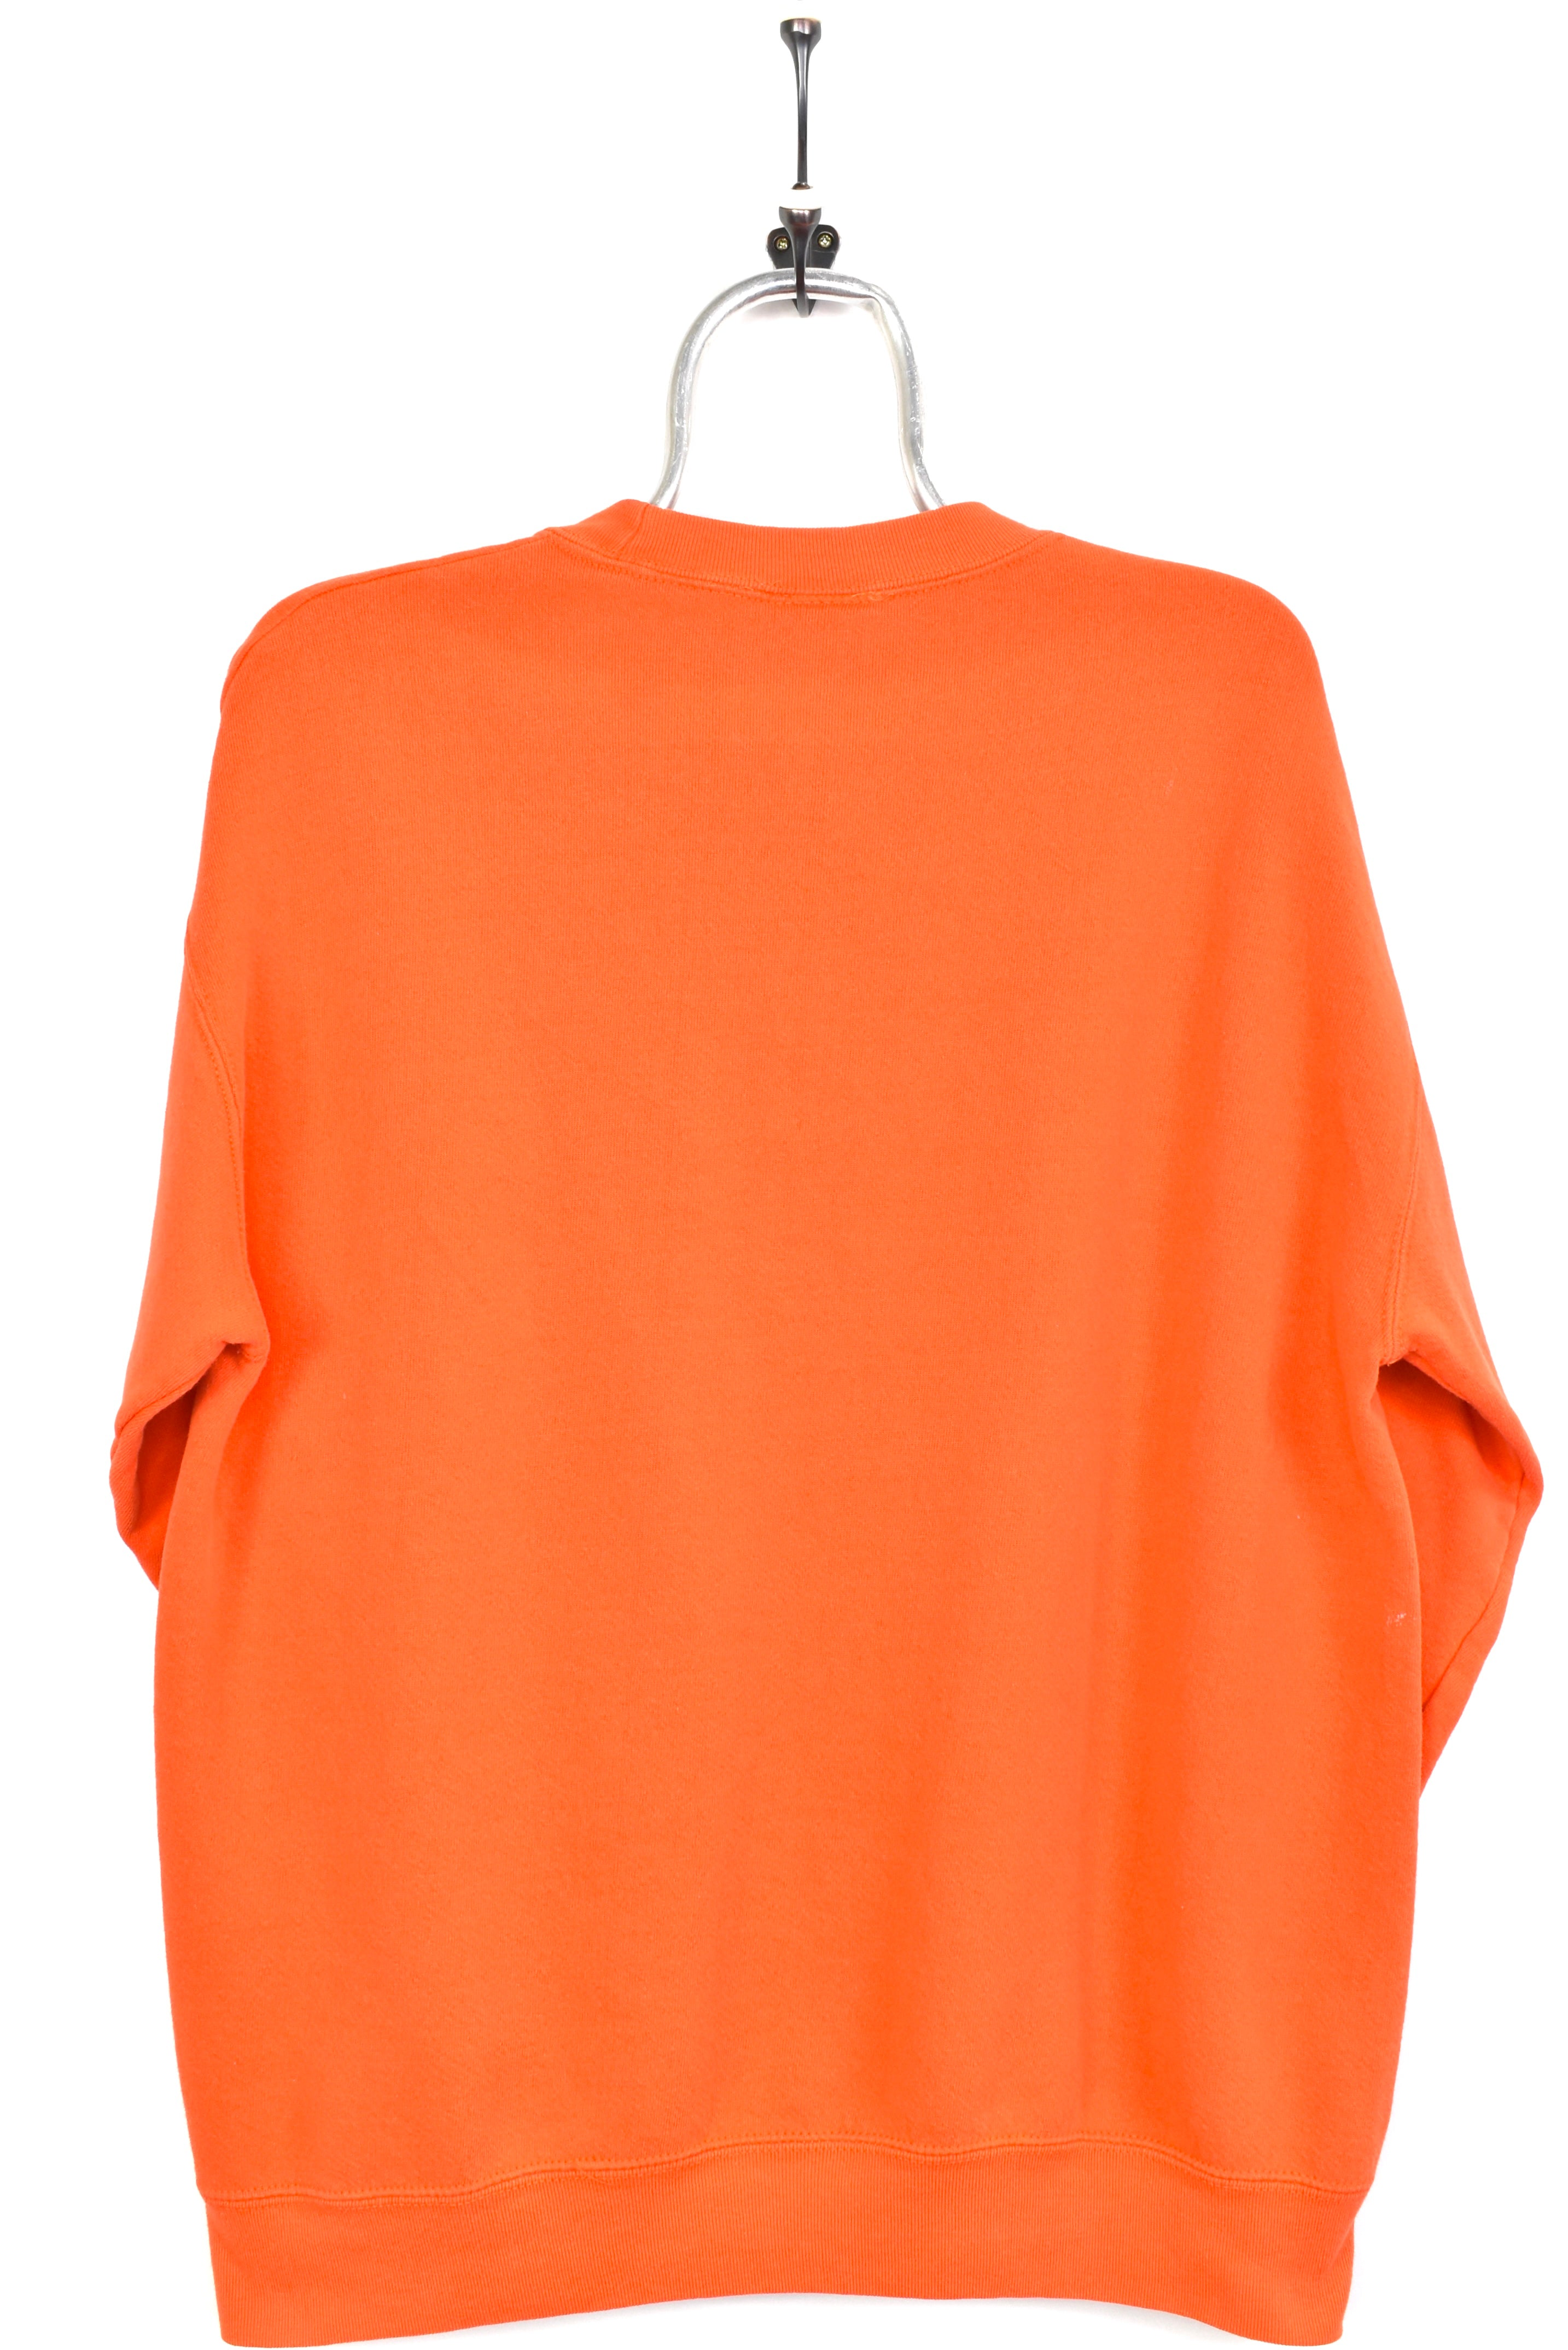 Vintage Chicago Bears sweatshirt, NFL embroidered crewneck - XL, orange PRO SPORT